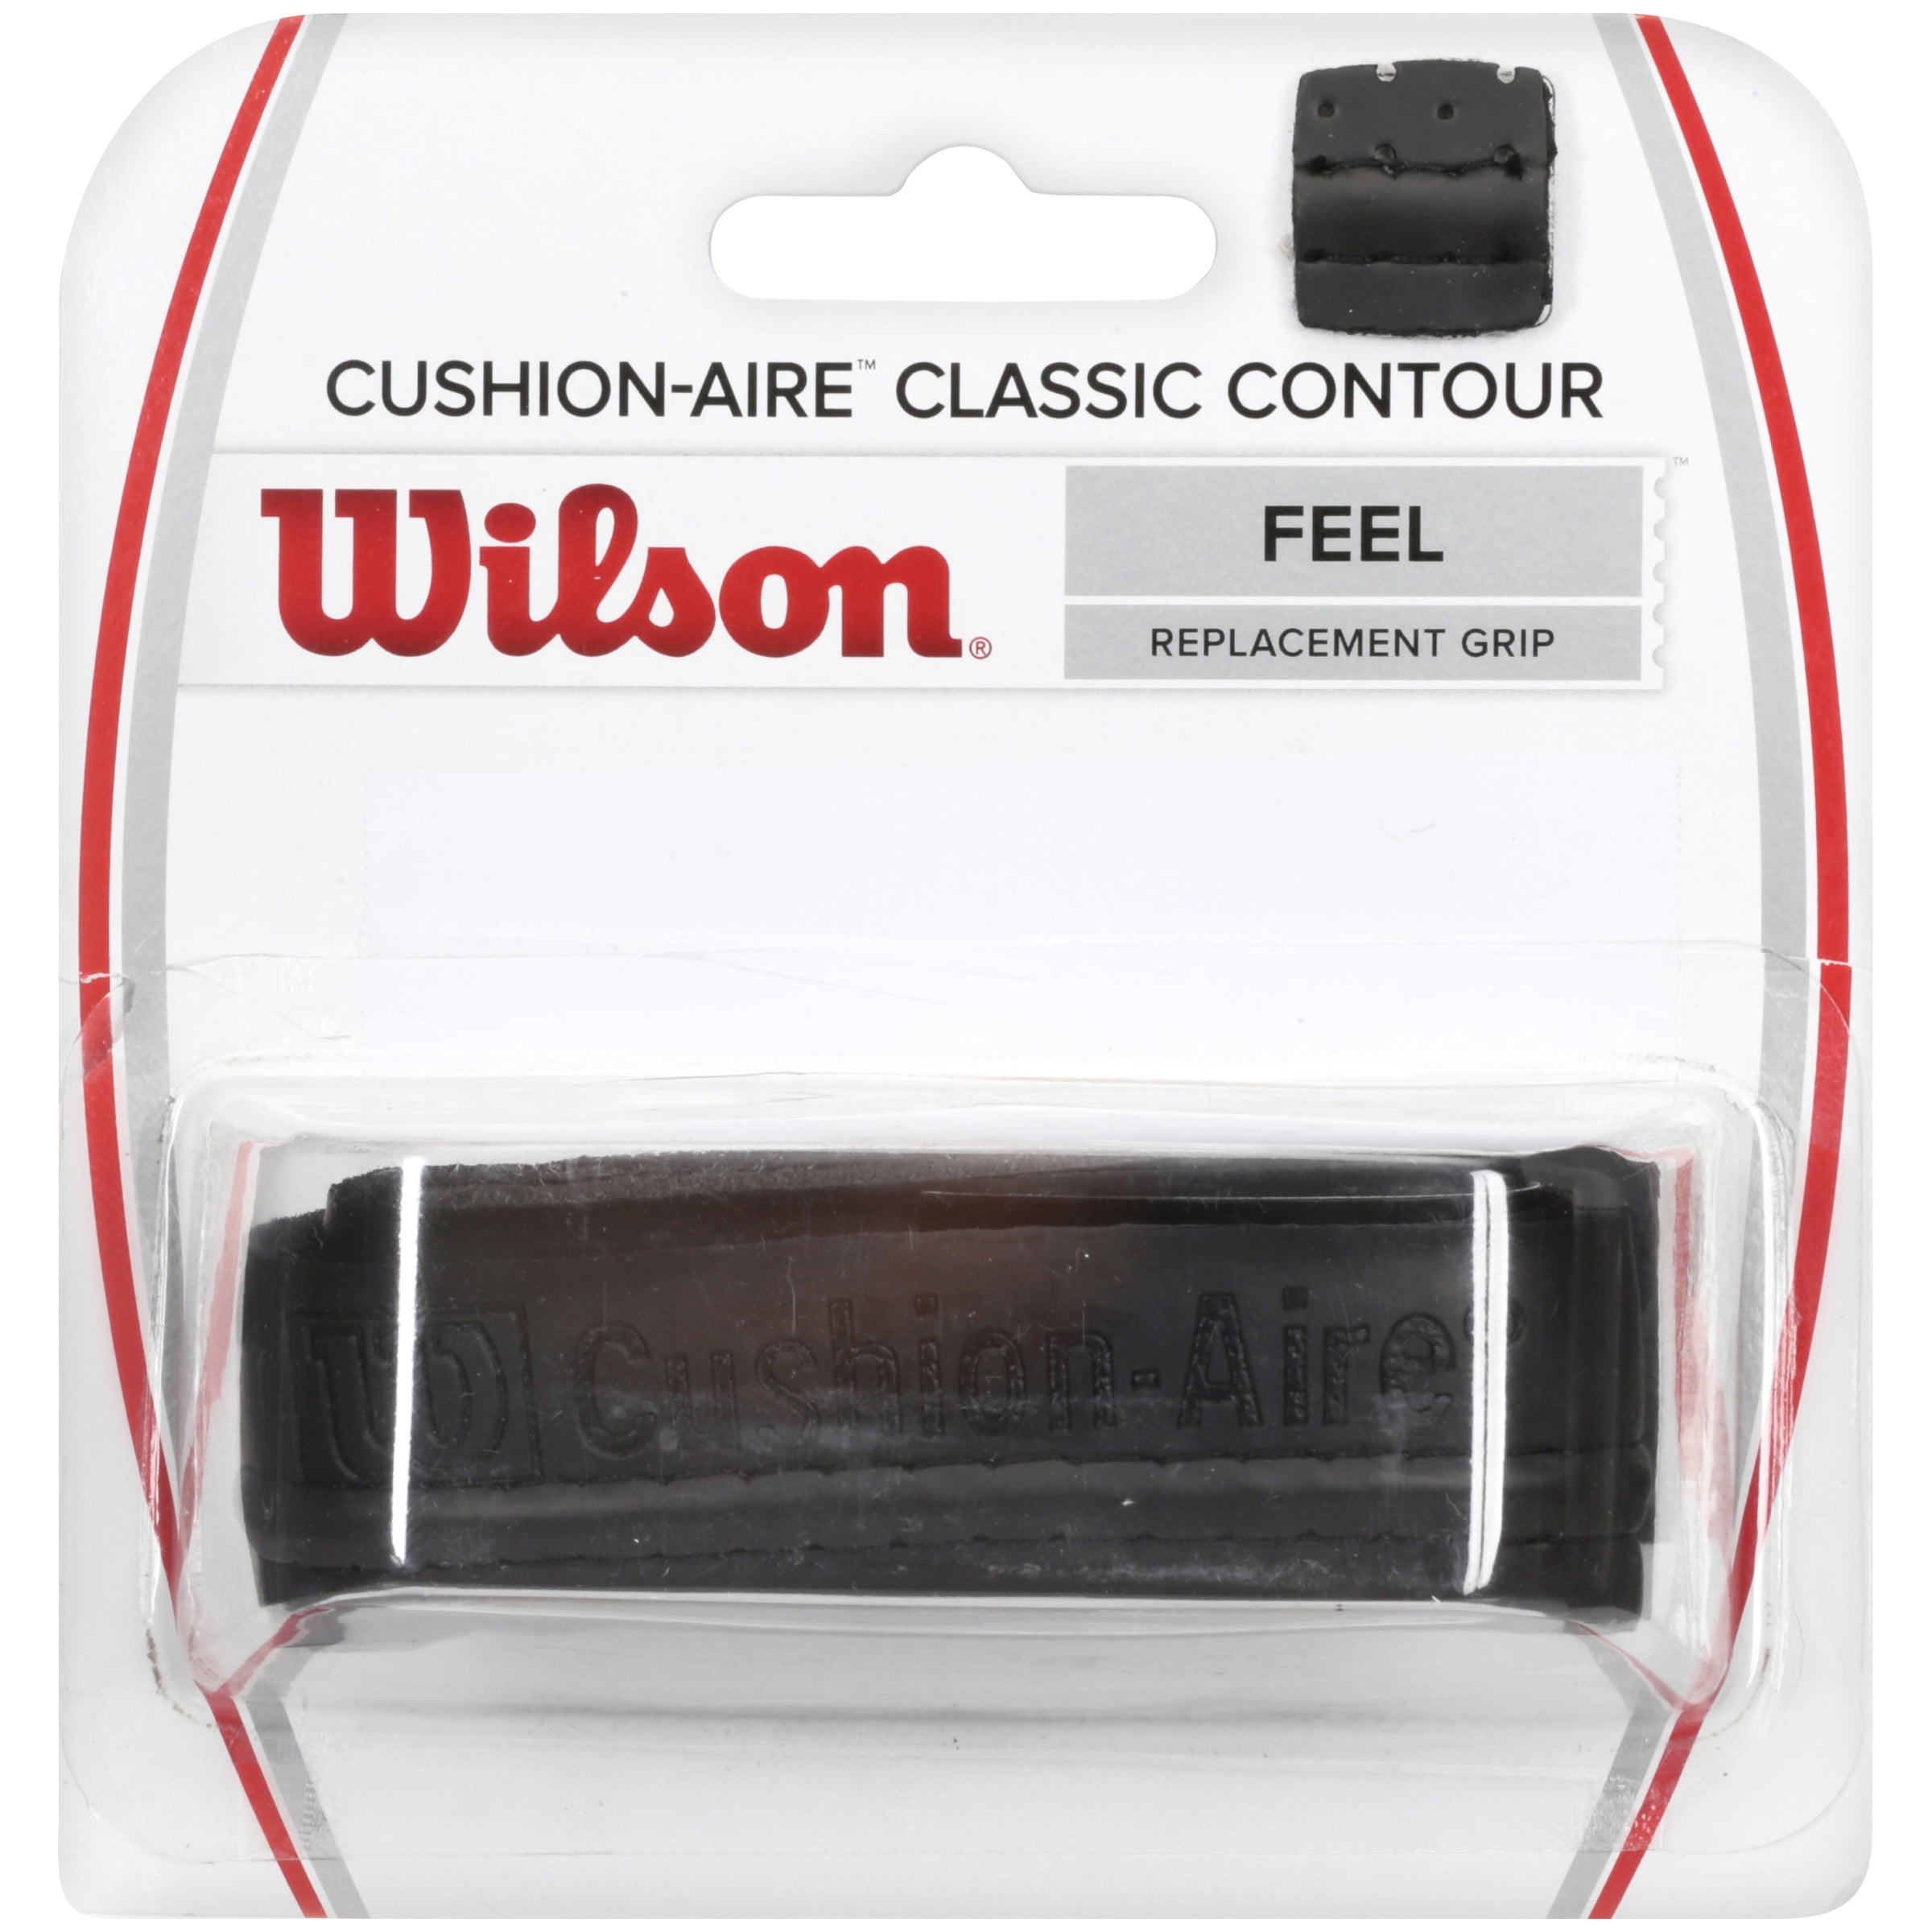 Details about   Cushion-Aire Classic Feel Contour Tennis Raquet Replacement Grip Black 